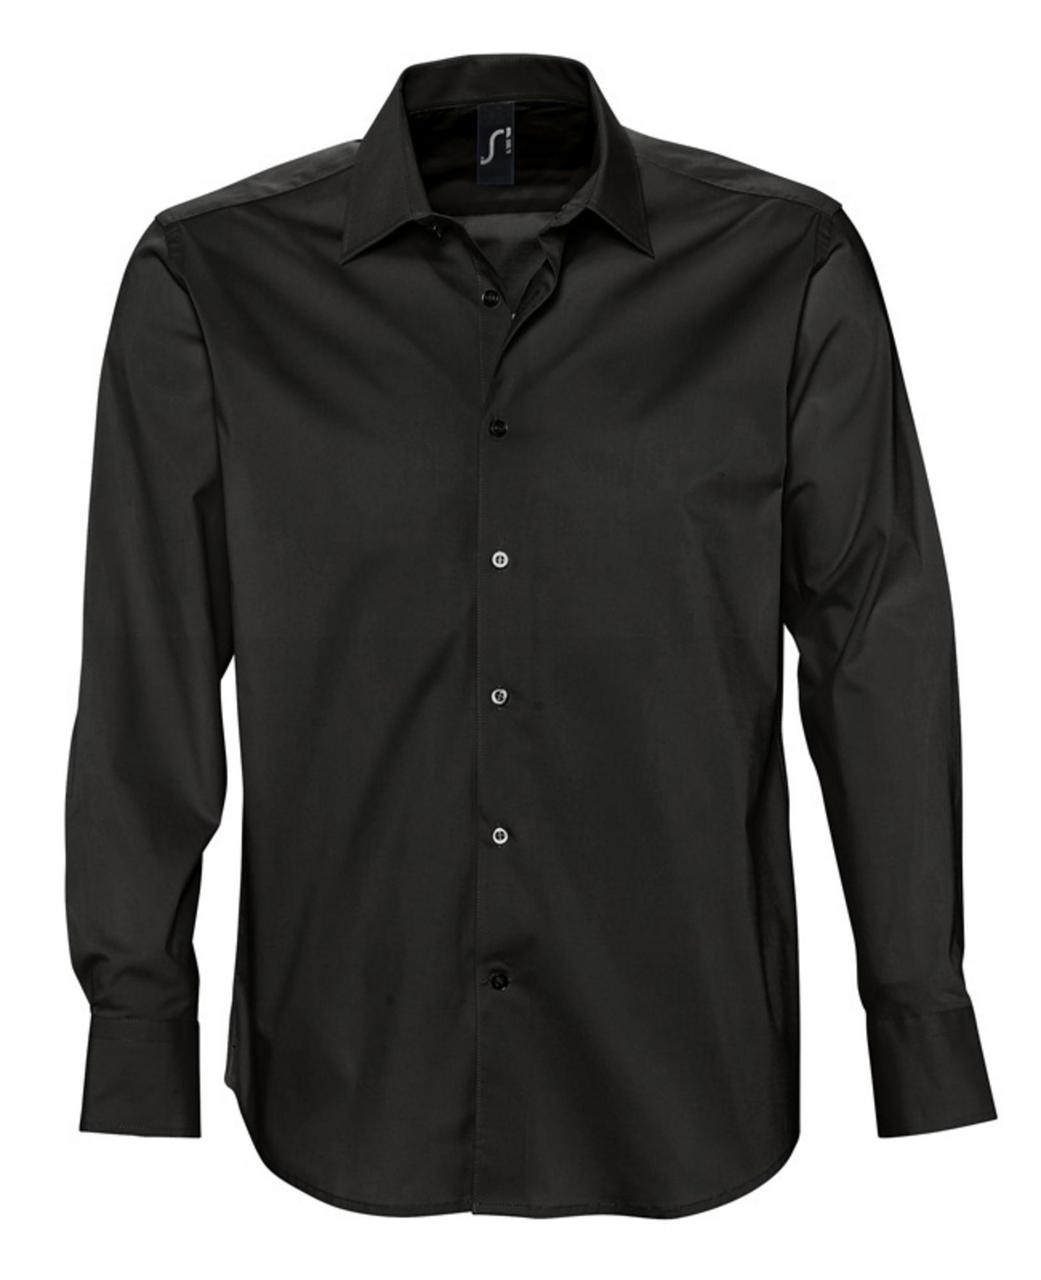 Рубашка мужская с длинным рукавом Brighton, черная (артикул 2508.30)